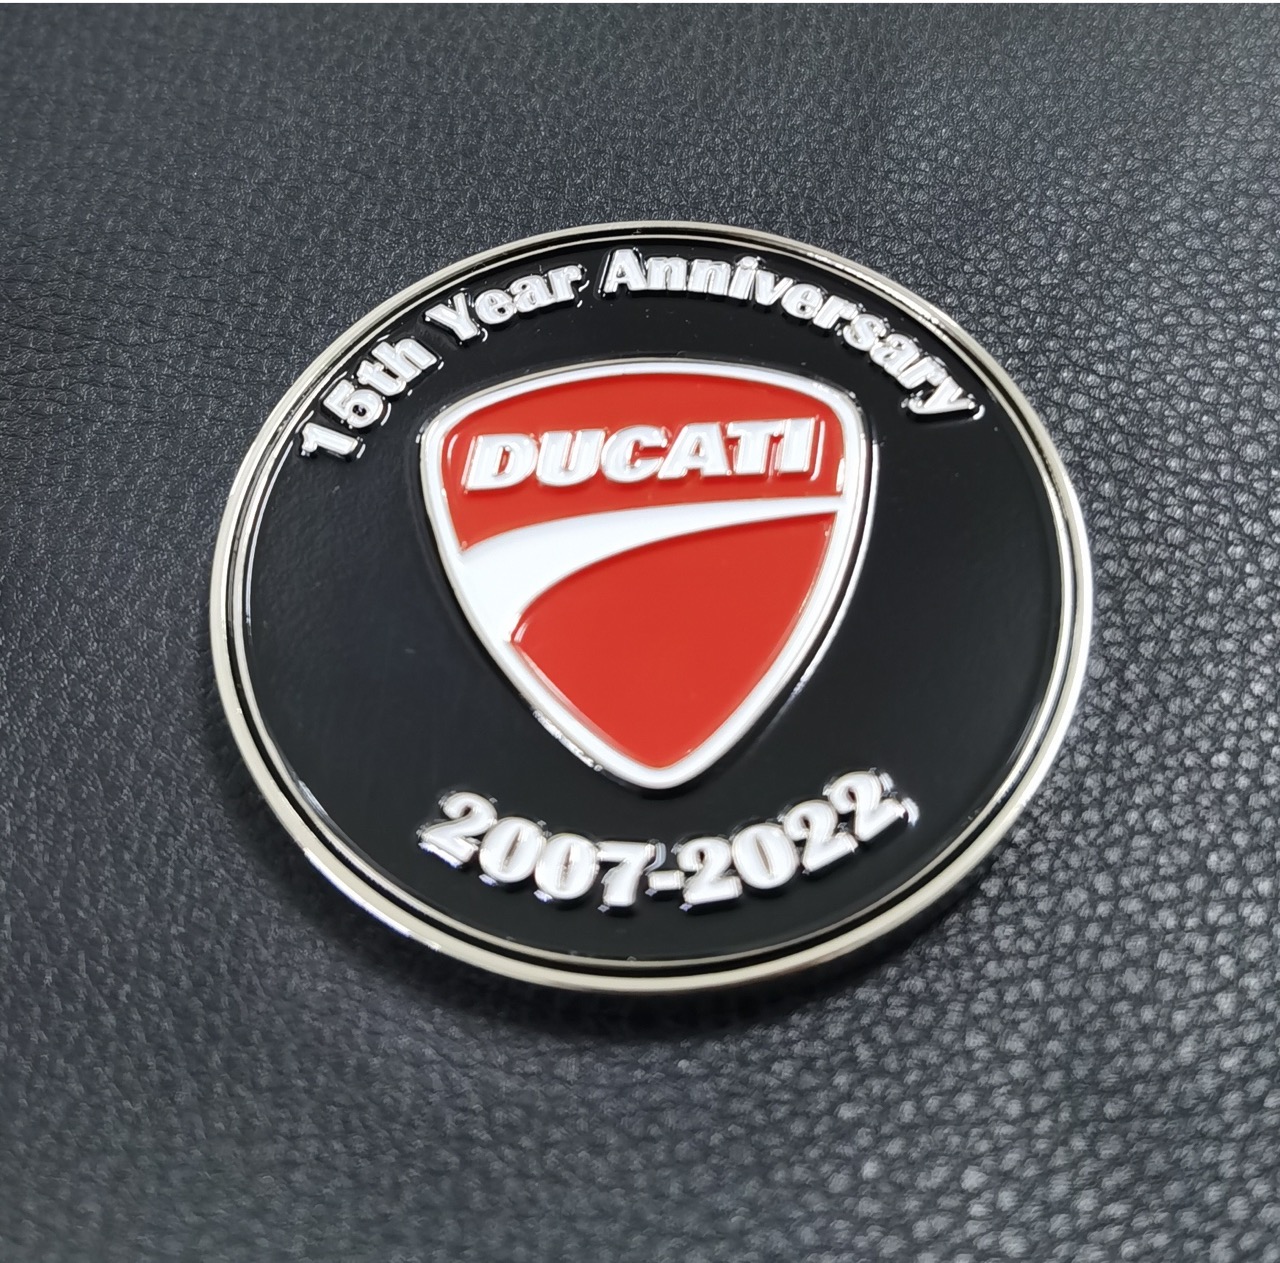 Ducati Club Coin 